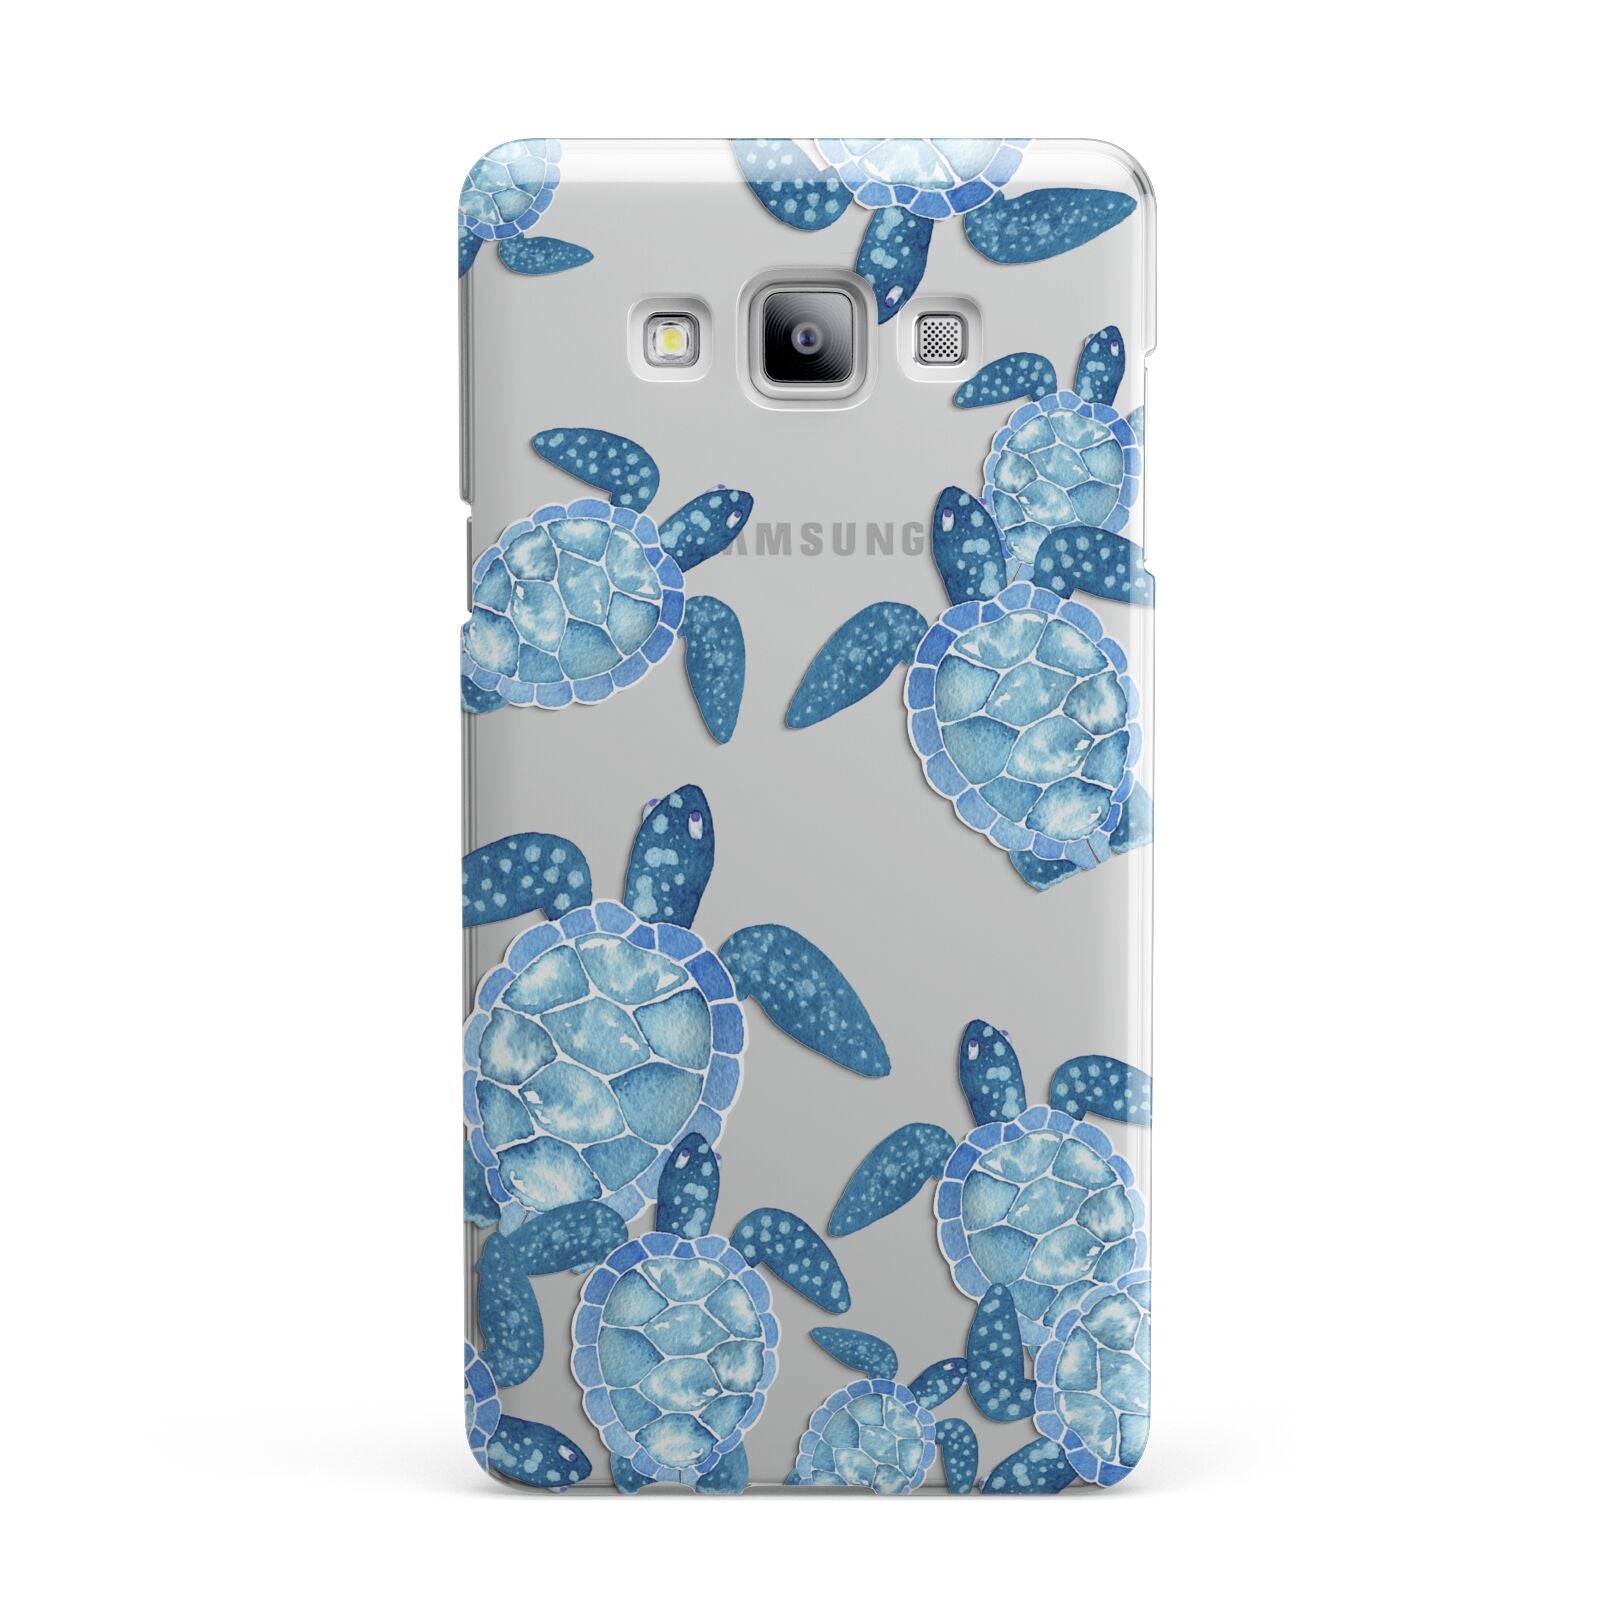 Turtle Samsung Galaxy A7 2015 Case